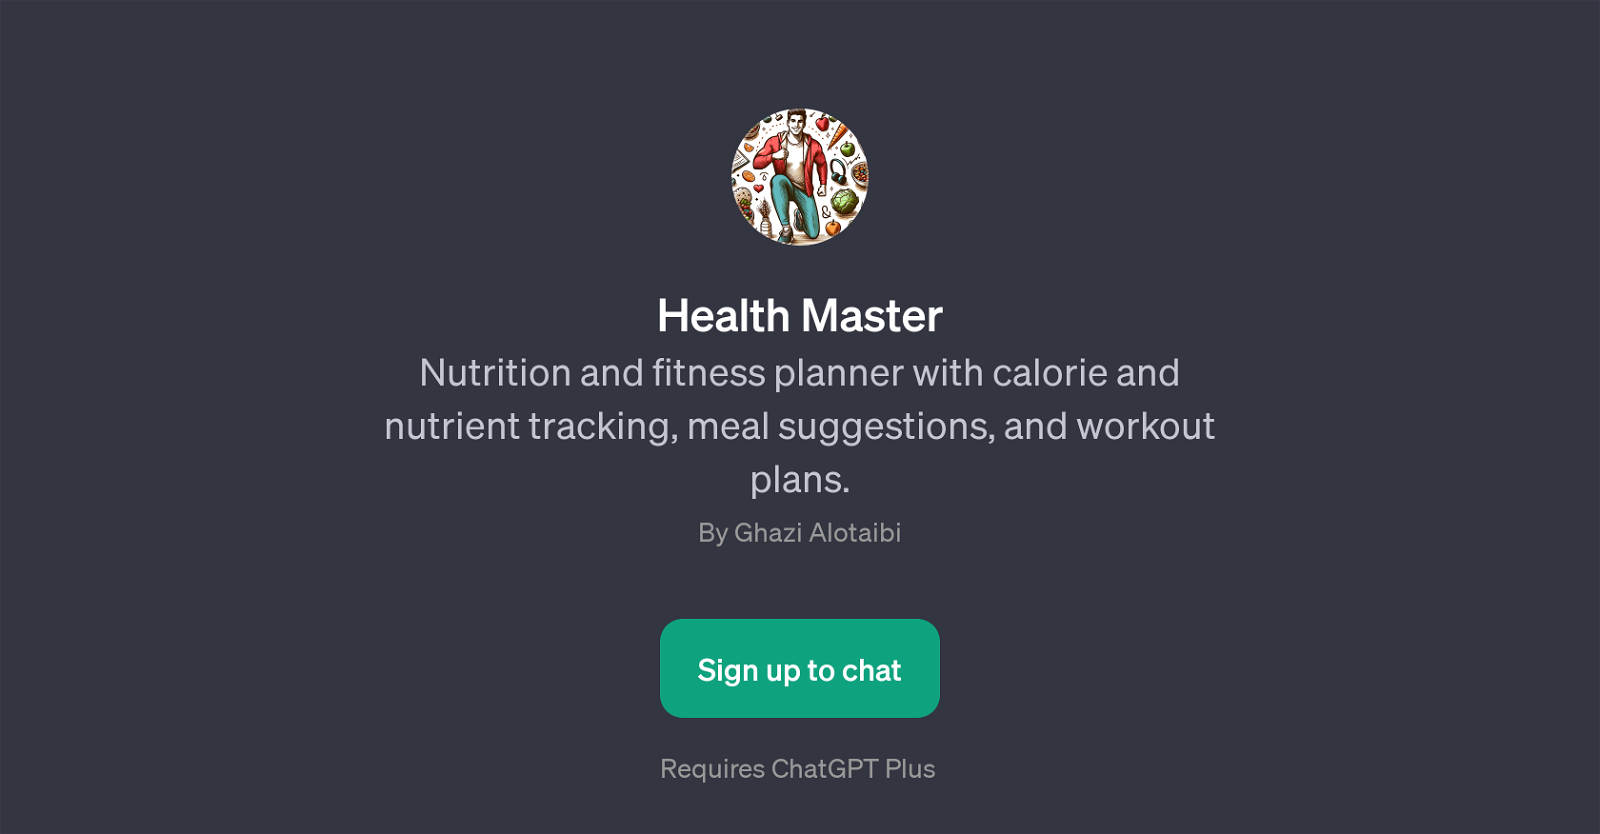 Health Master website